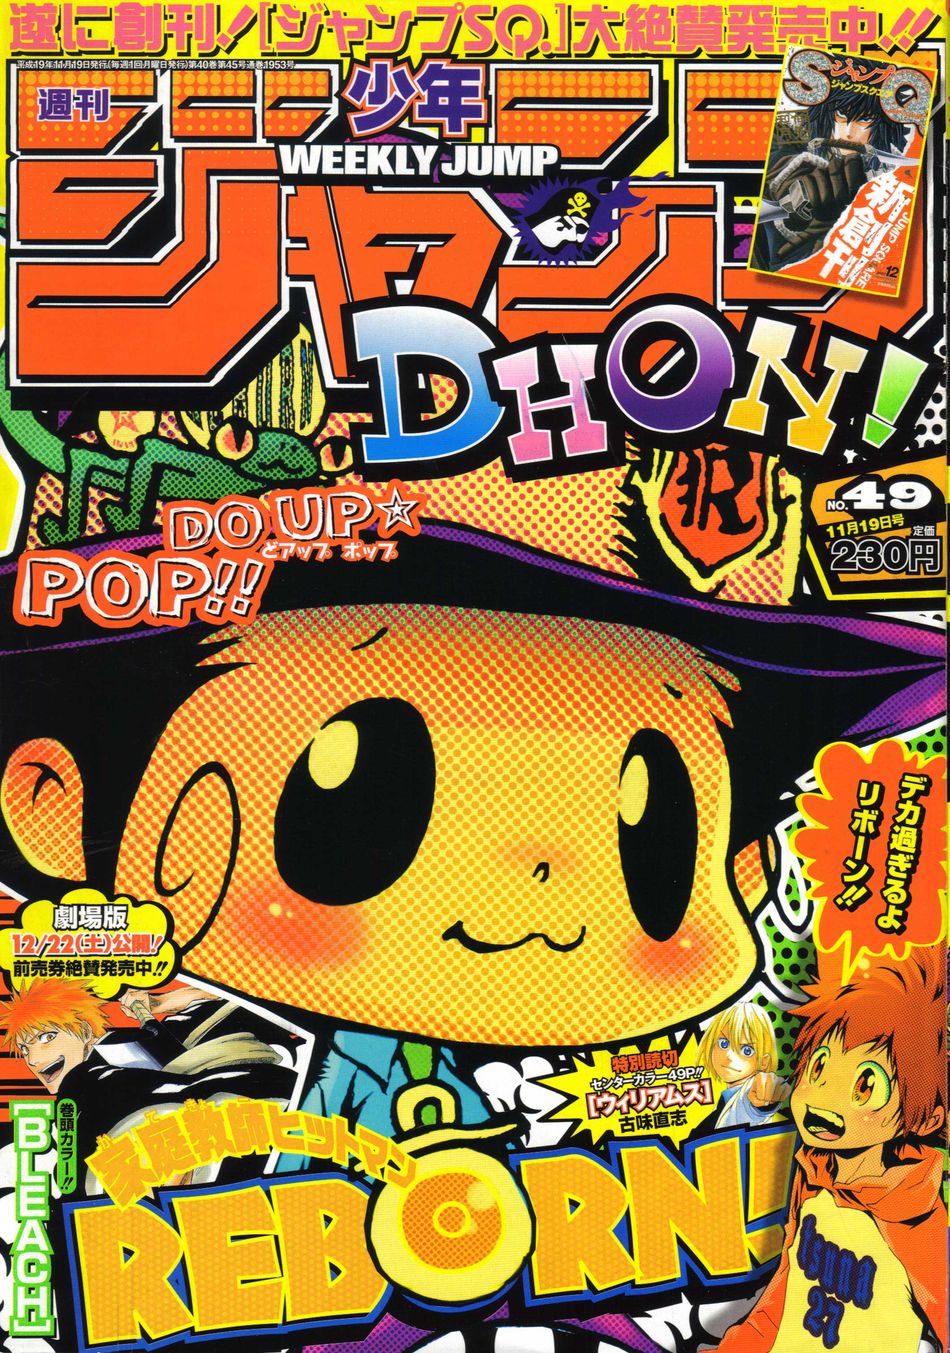 Weekly shonen jump. Weekly Shonen Jump обложки. Сёнен джамп обложки. Shonen Jump Золотая обложка. Шонен джамп бумага.